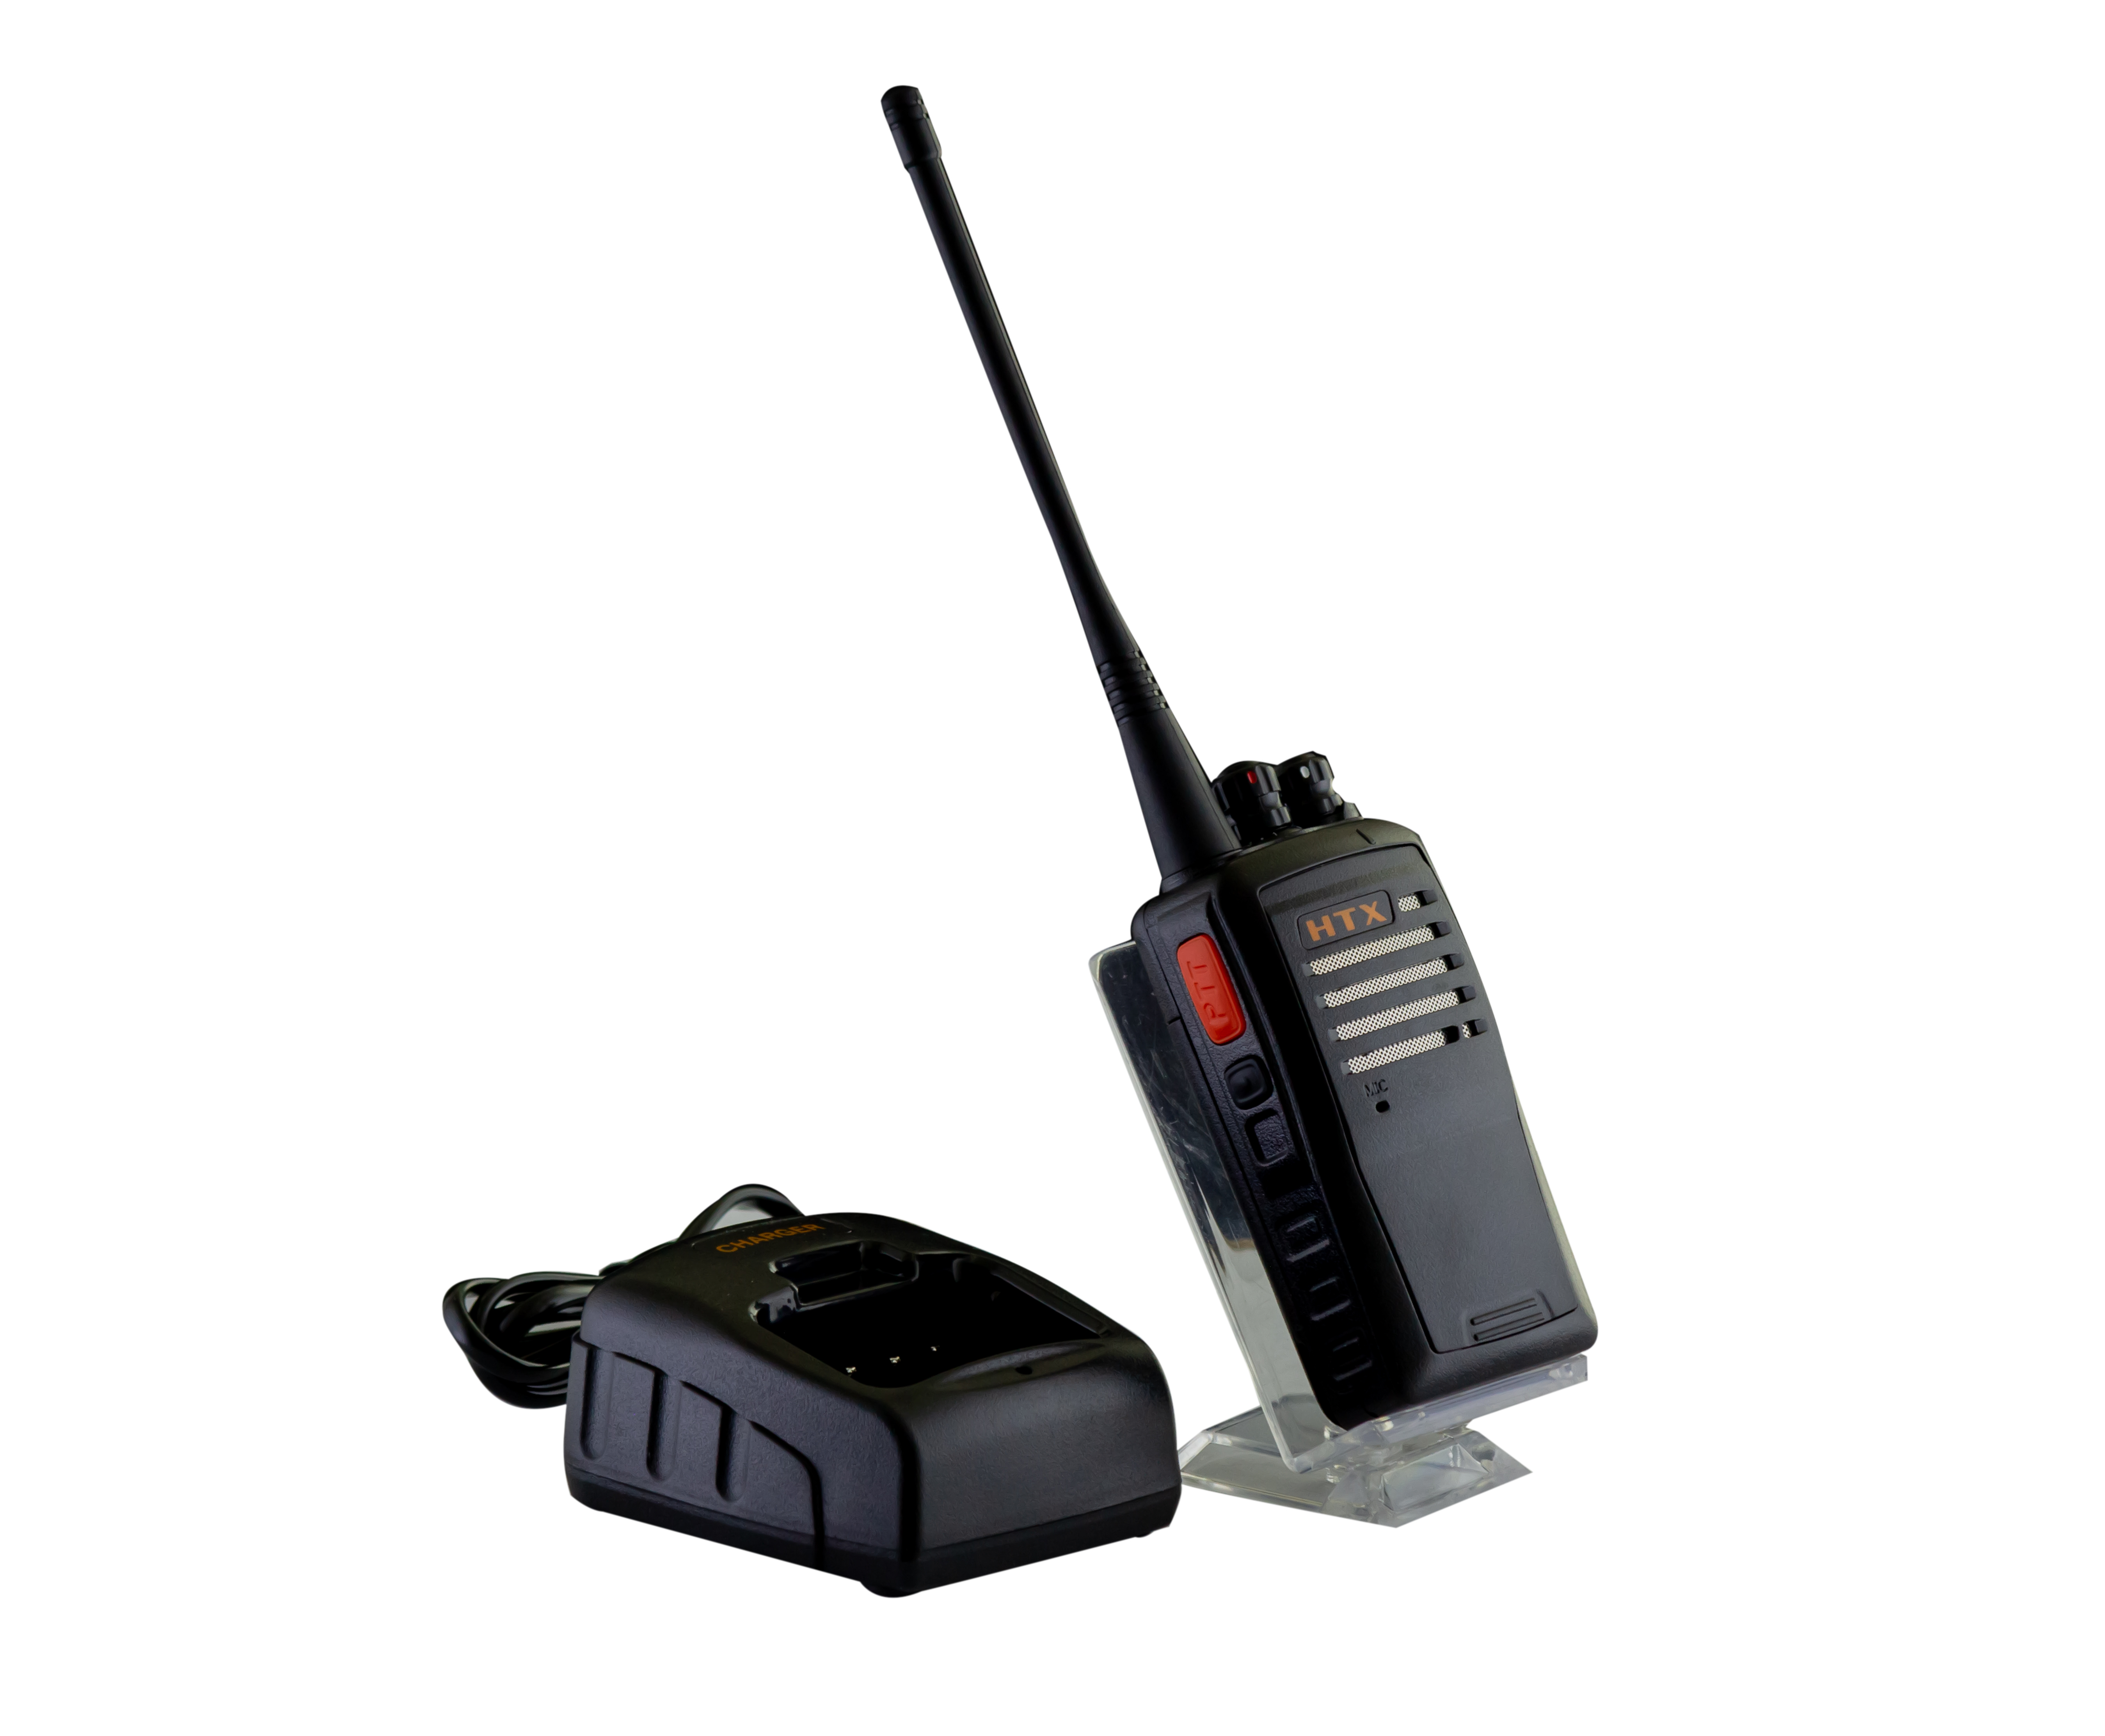 RADIO COMUNICACIÓN 2 VIAS HTX-590